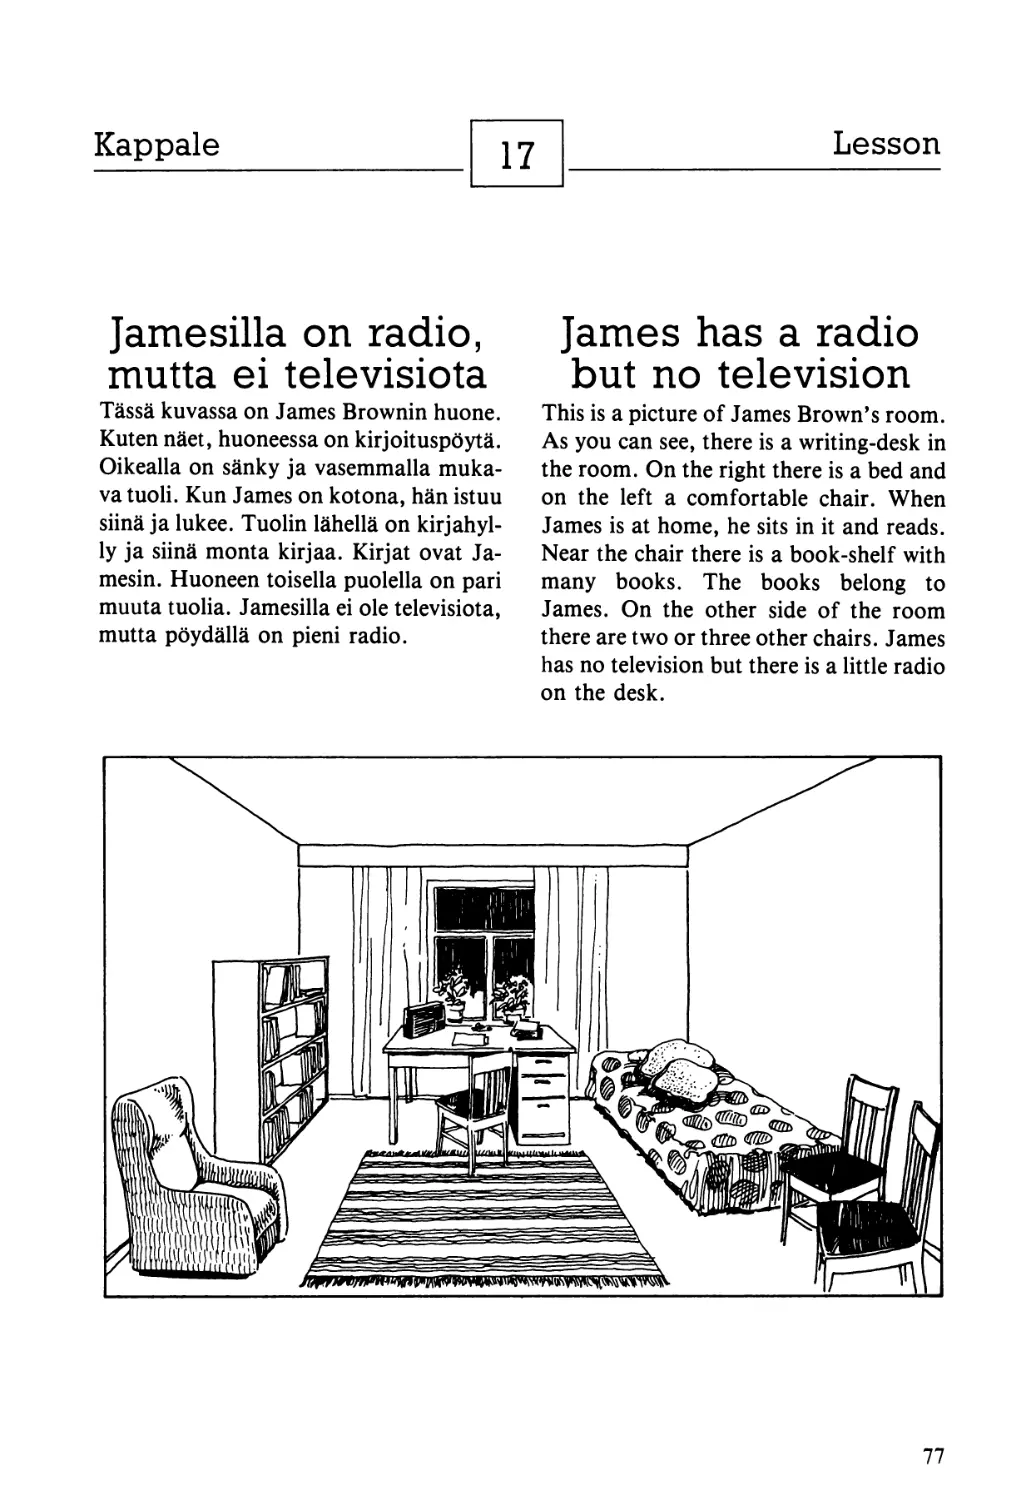 17. Jamesilla on radio, mutta ei televisiota — James has a radio but no television